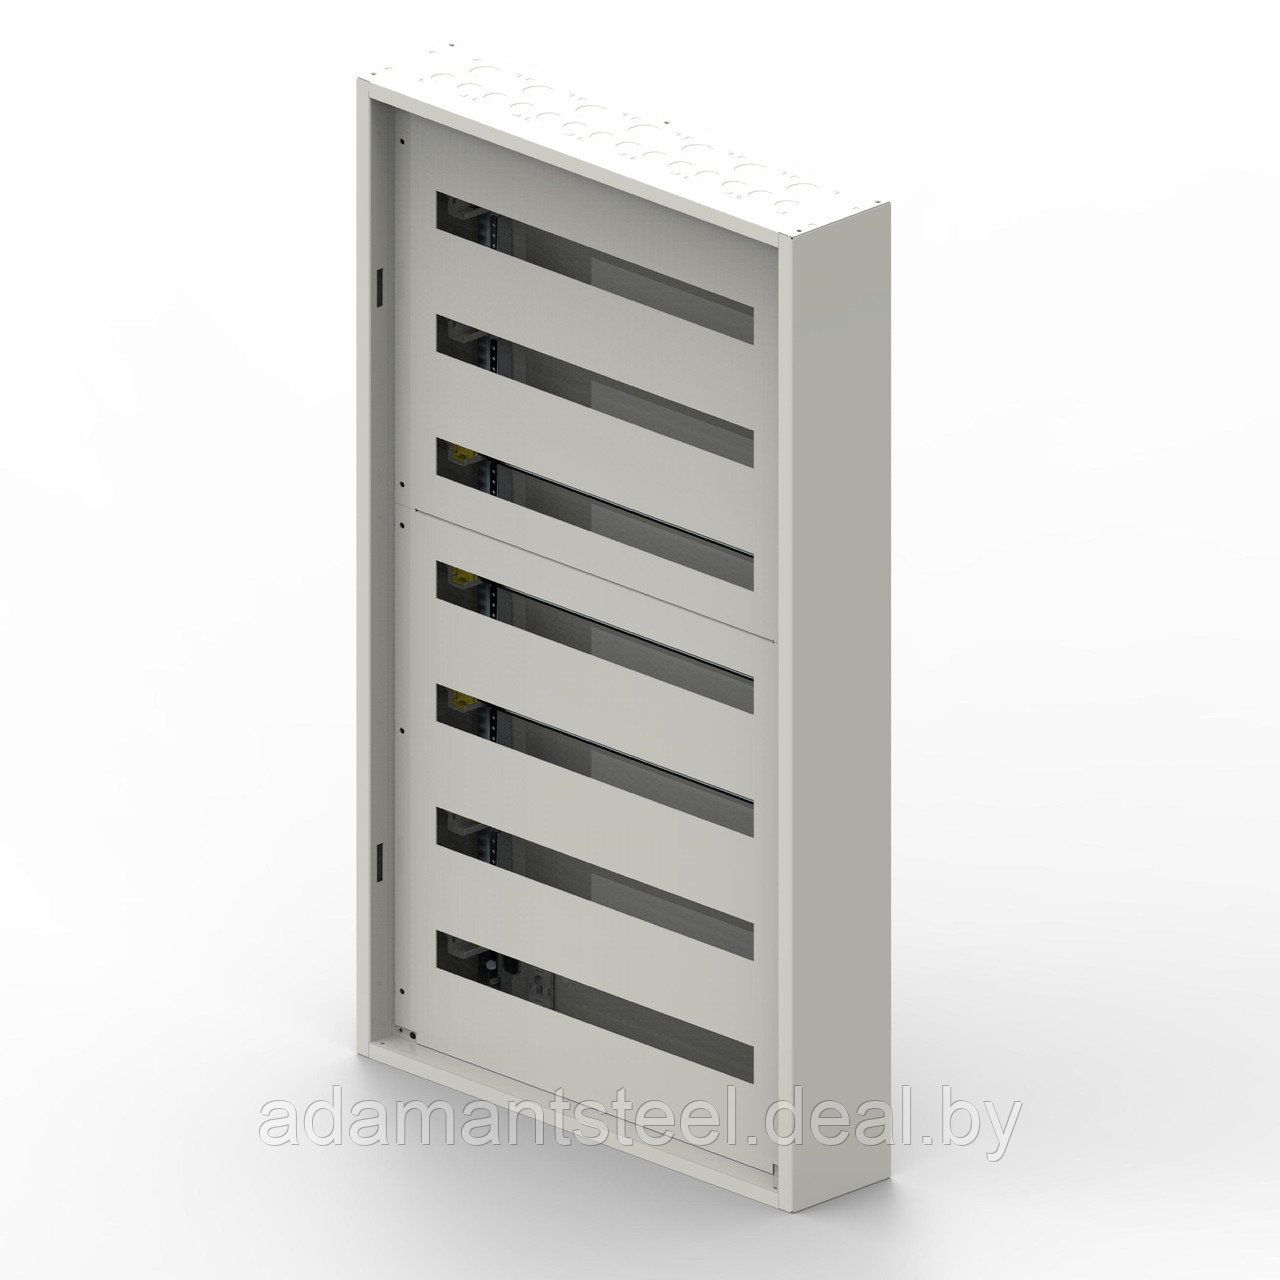 XL3S 160 Шкаф навесной металлический 252 М (7x36)